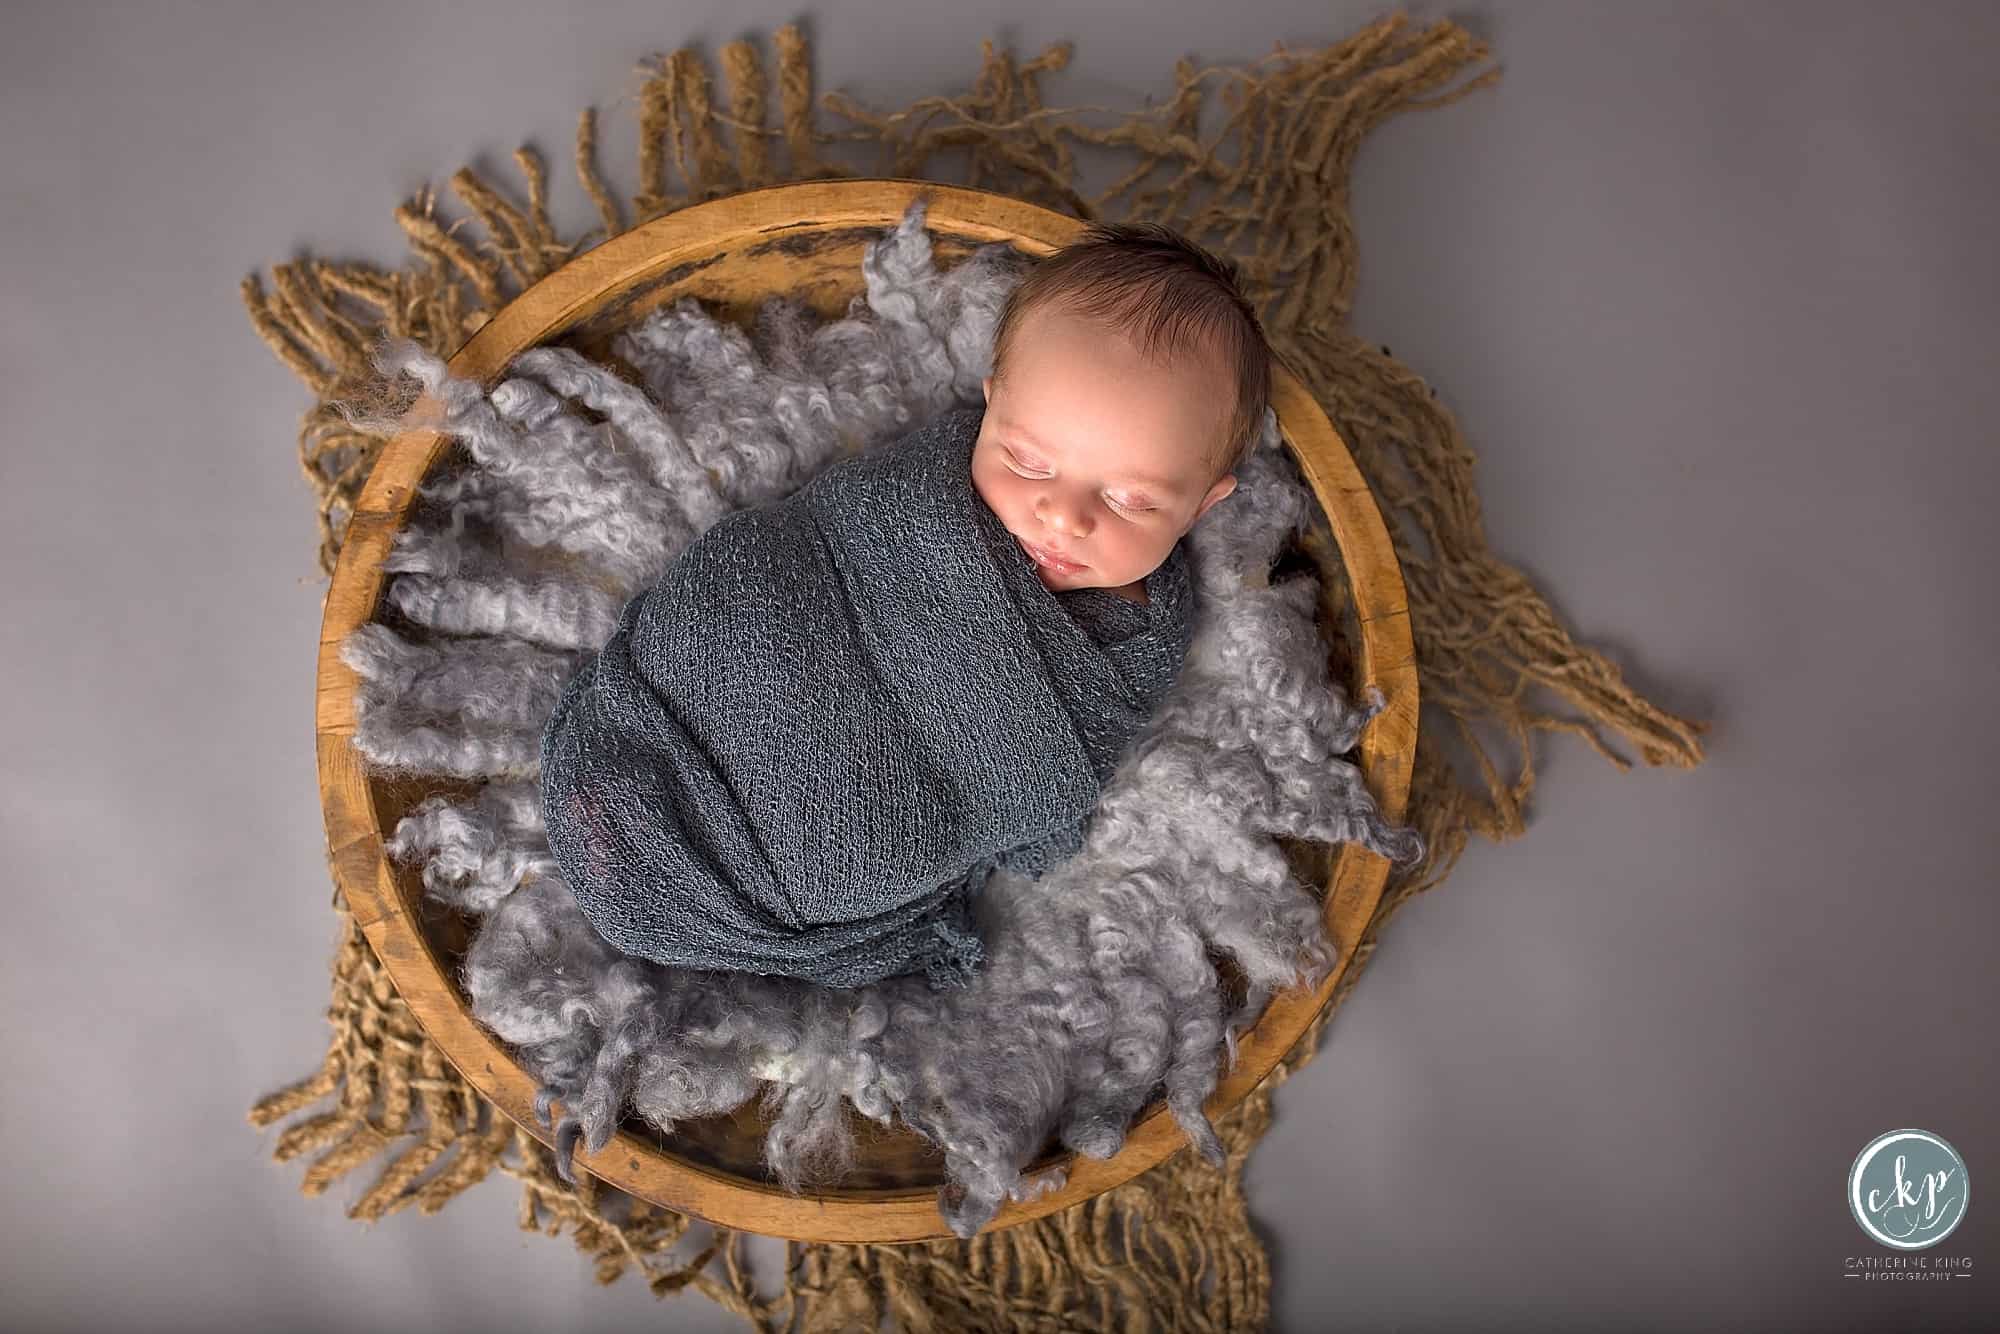 remington newborn photography by catherine king photography a madison ct newborn photographer